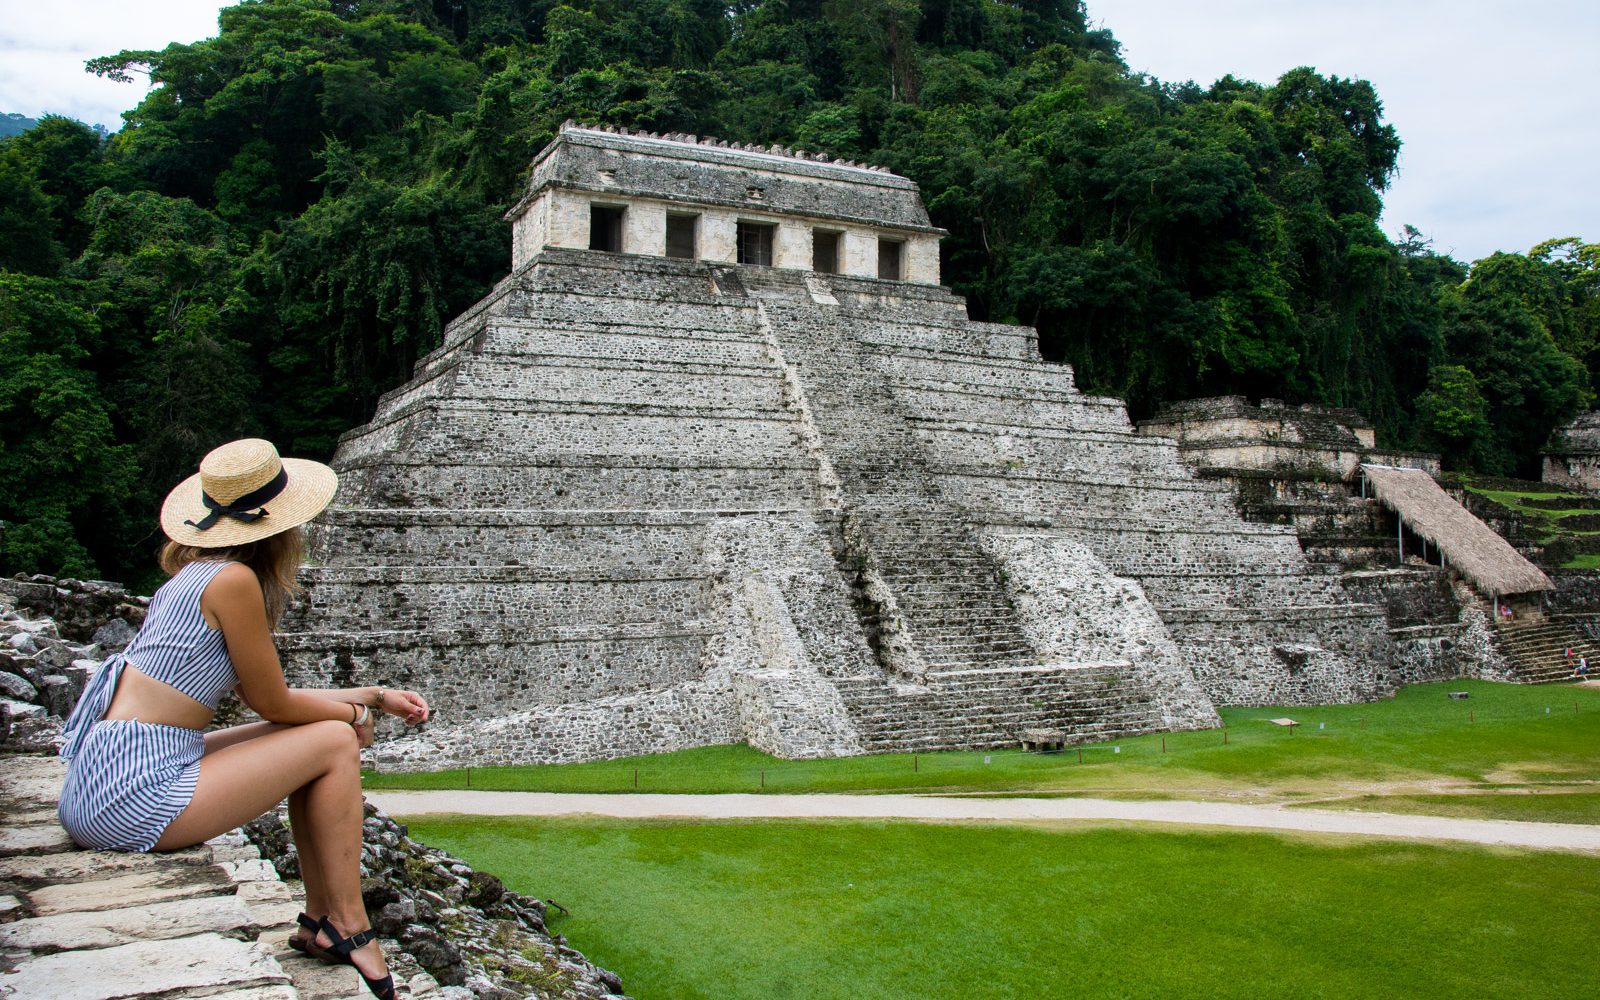 Most ancient Mayan Temples